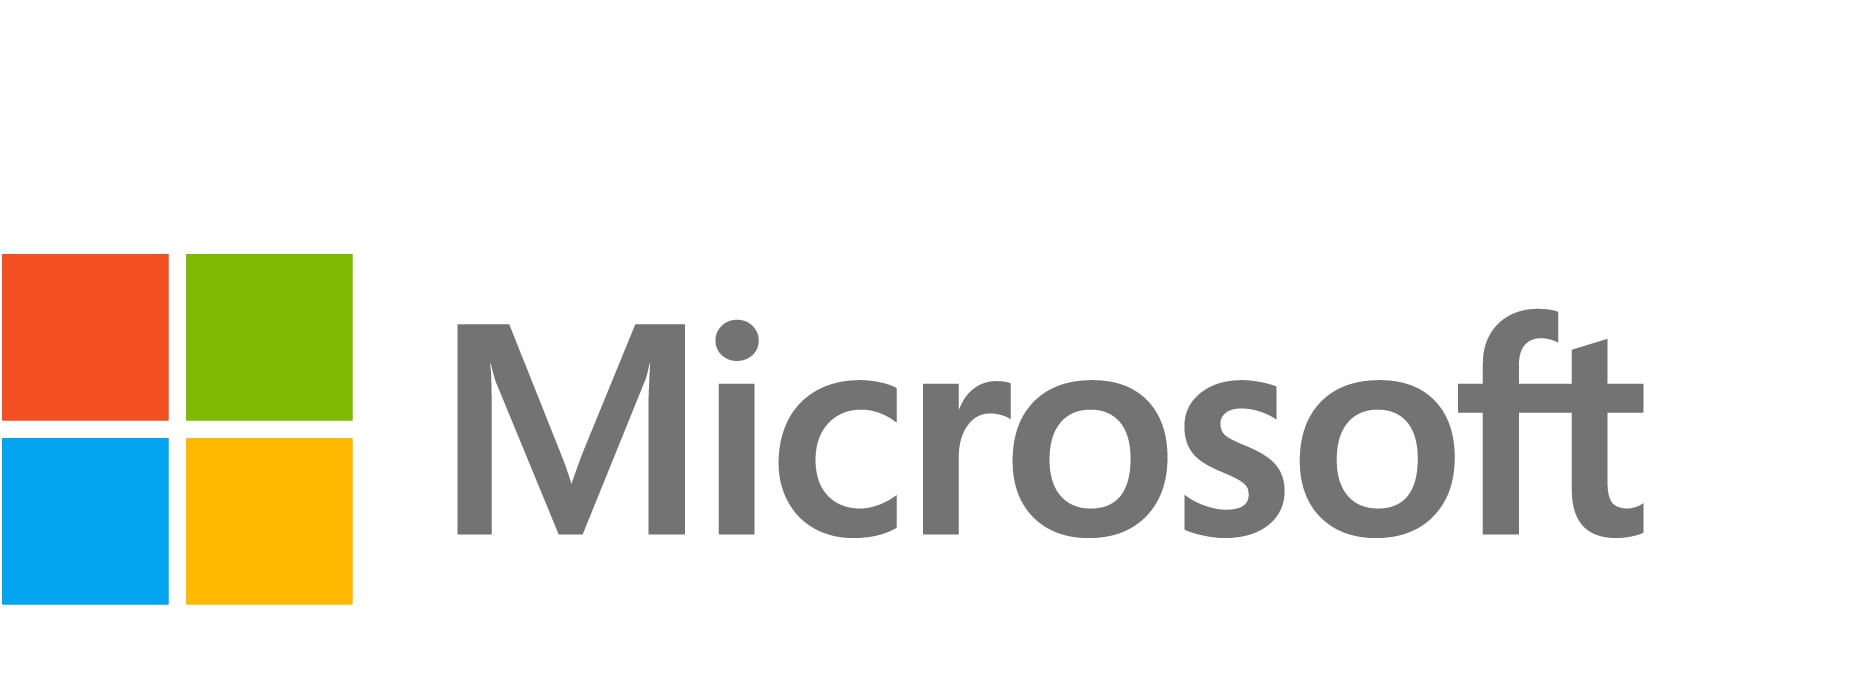 Microsoft SharePoint Online (Plan 2) - subscription license (1 month) - 1 u